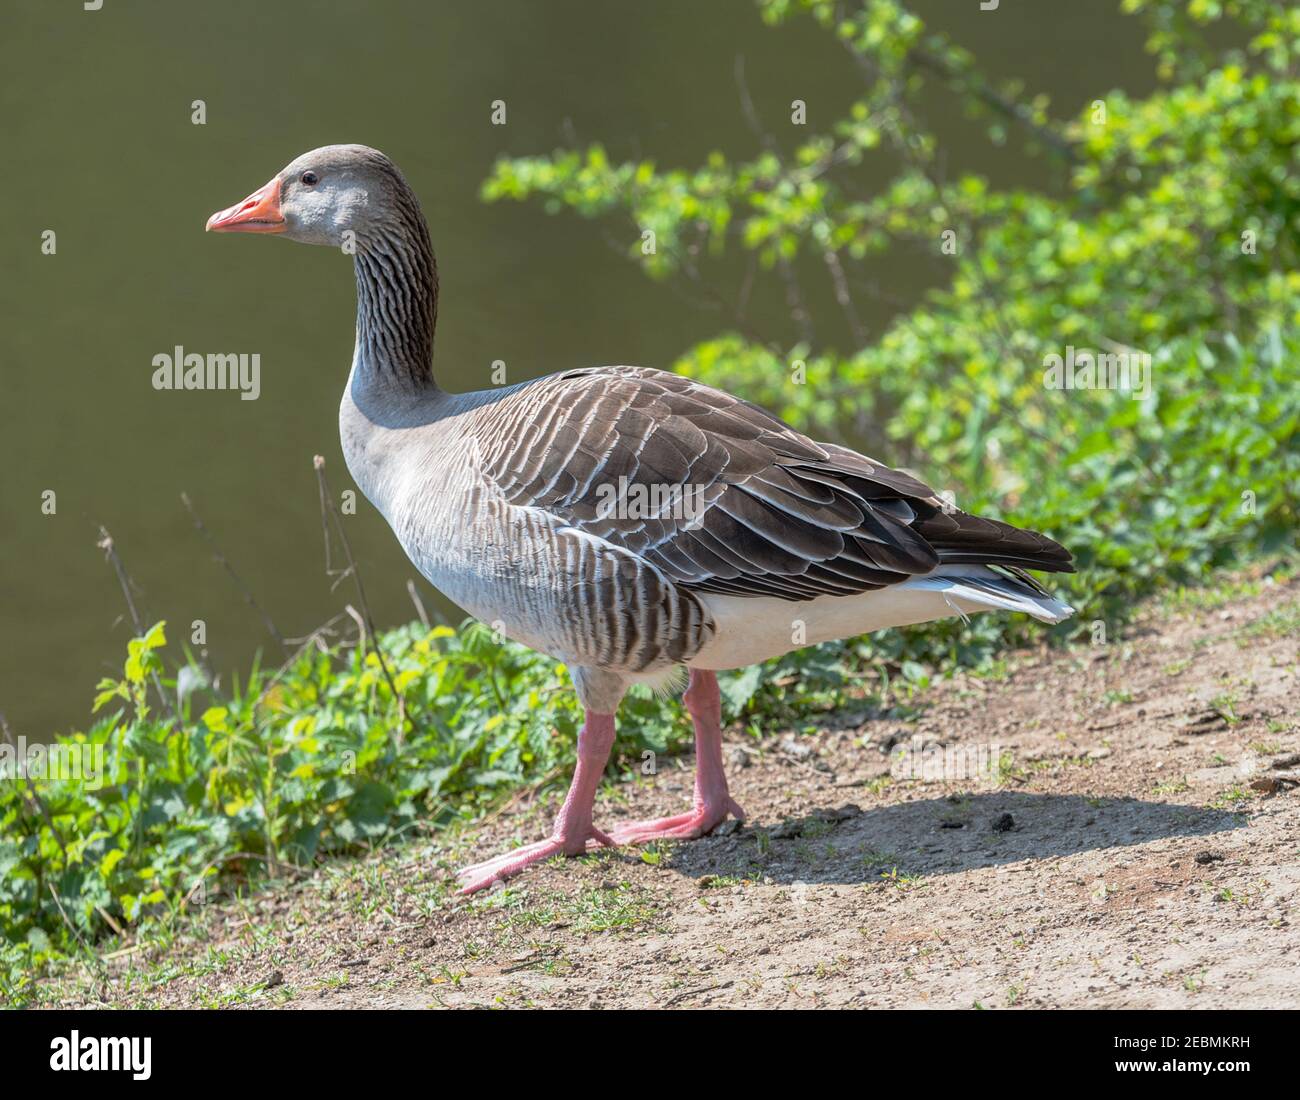 Greylag goose, Anser anser, adult, stands on sandy ground Stock Photo